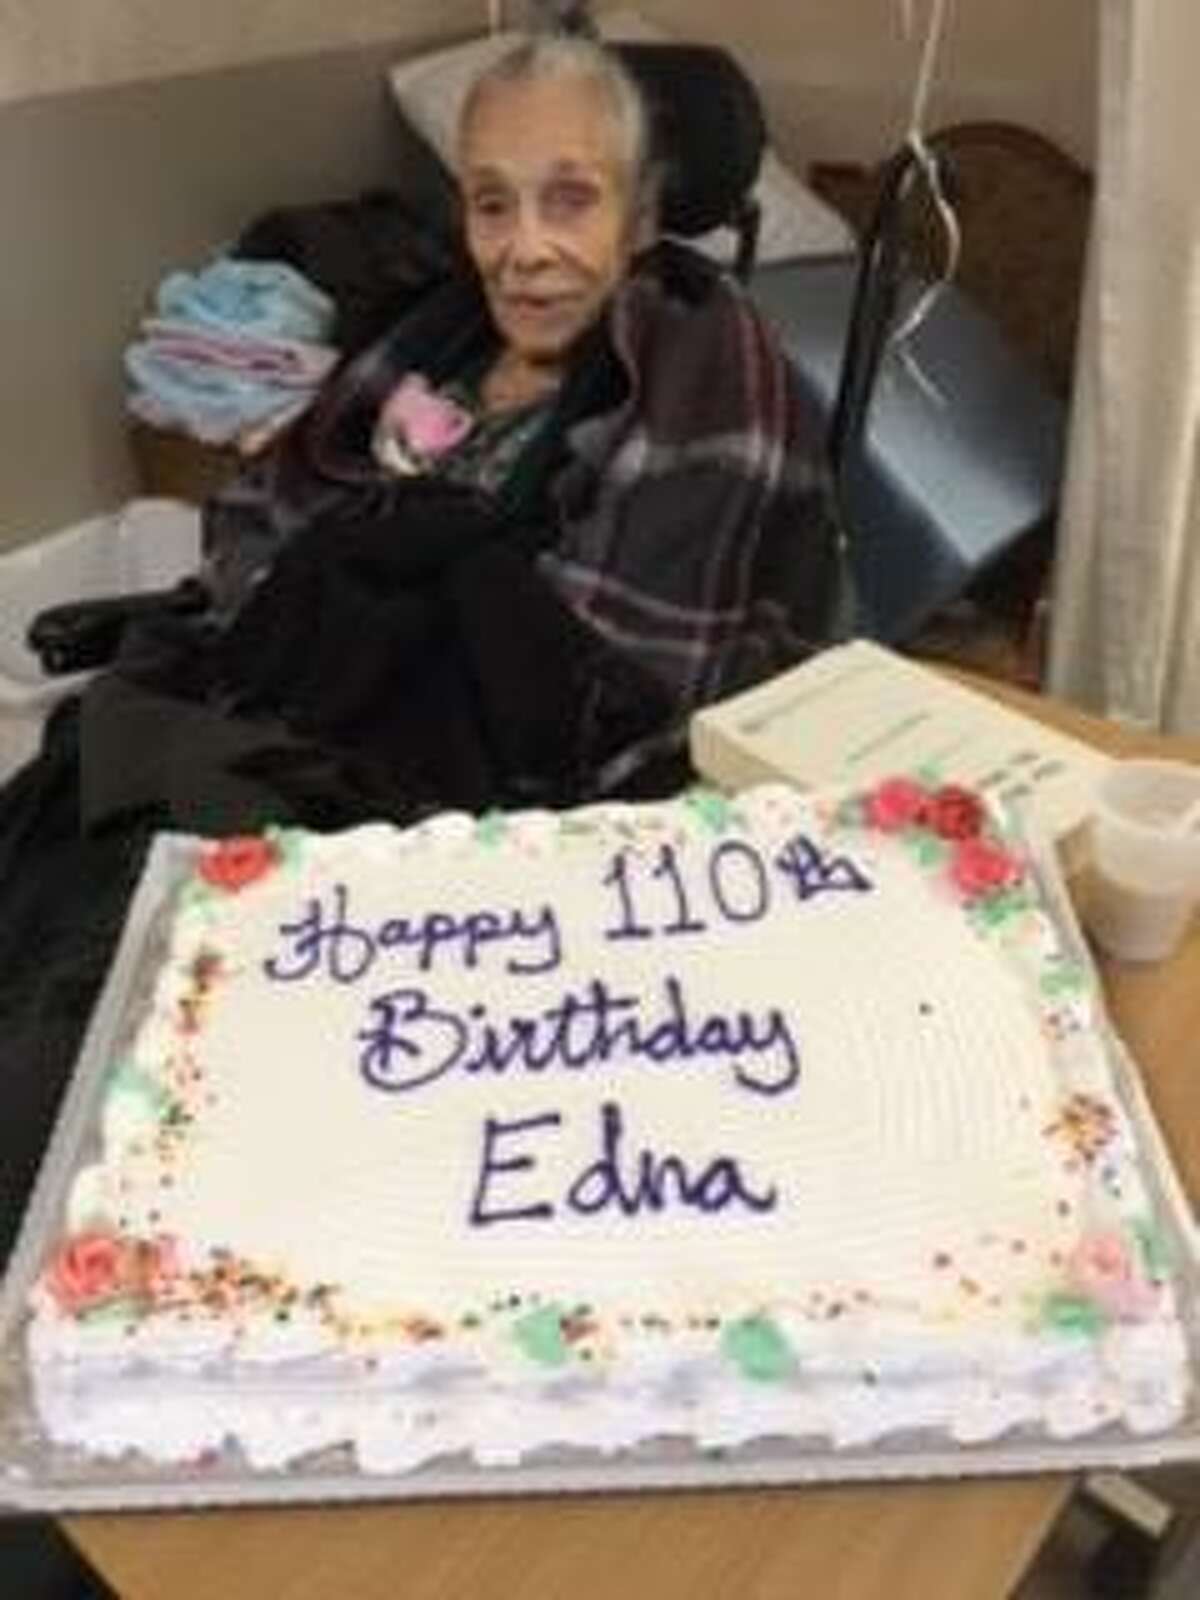 Edna McCabe, born Edna Mae Dawson, celebrated her 110th birthday Nov. 22, 2020, making her one of the rare “supercentenarians” in the world.